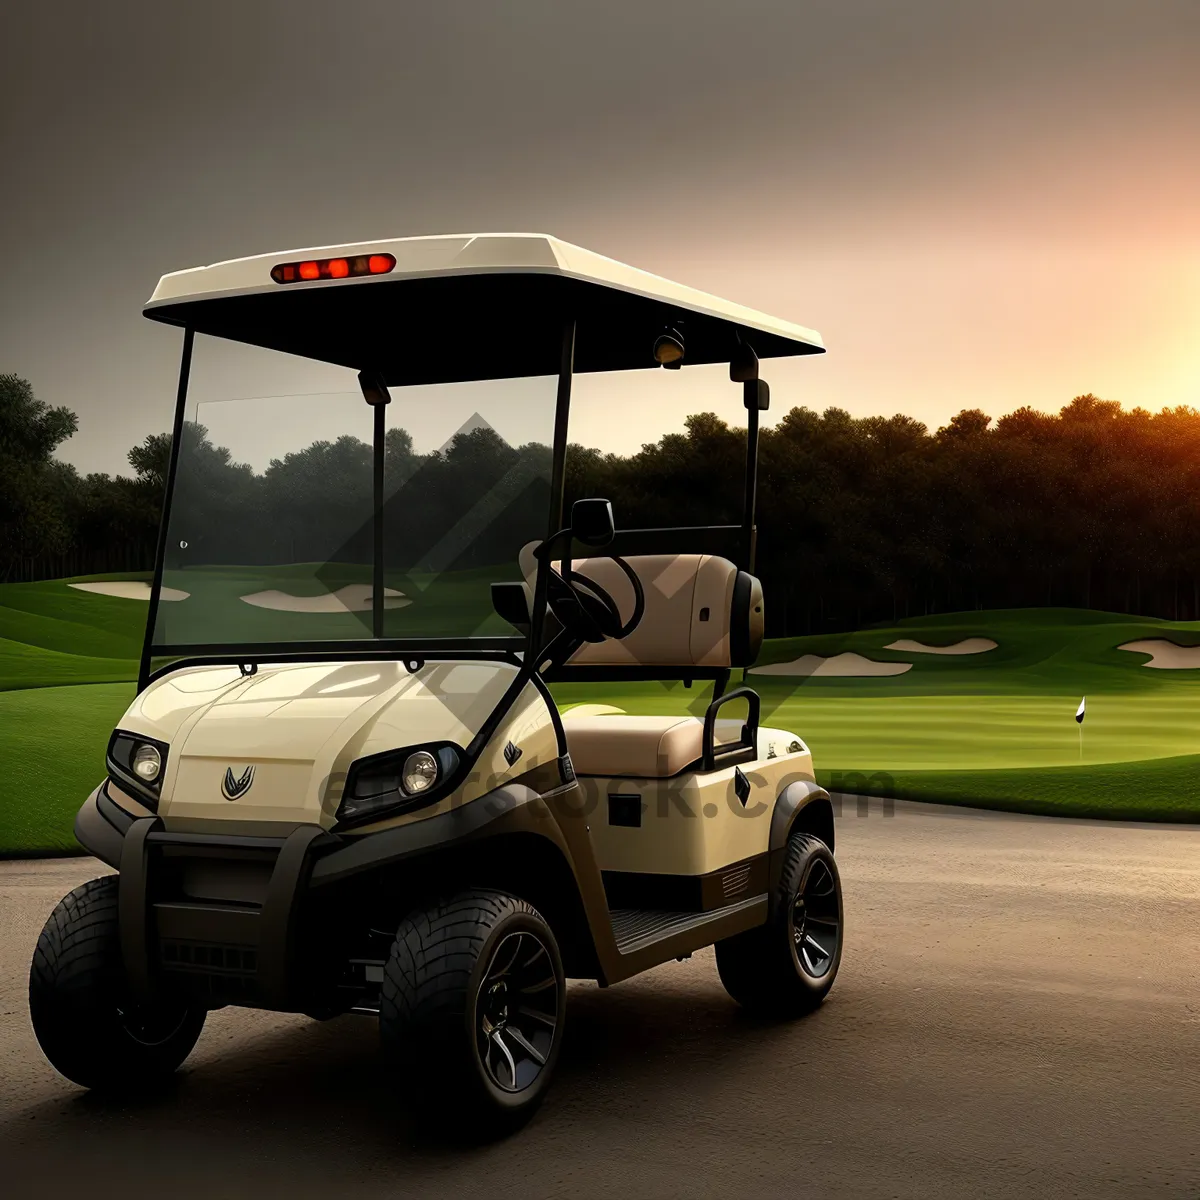 Picture of Summer Golf Cart on Green Grass